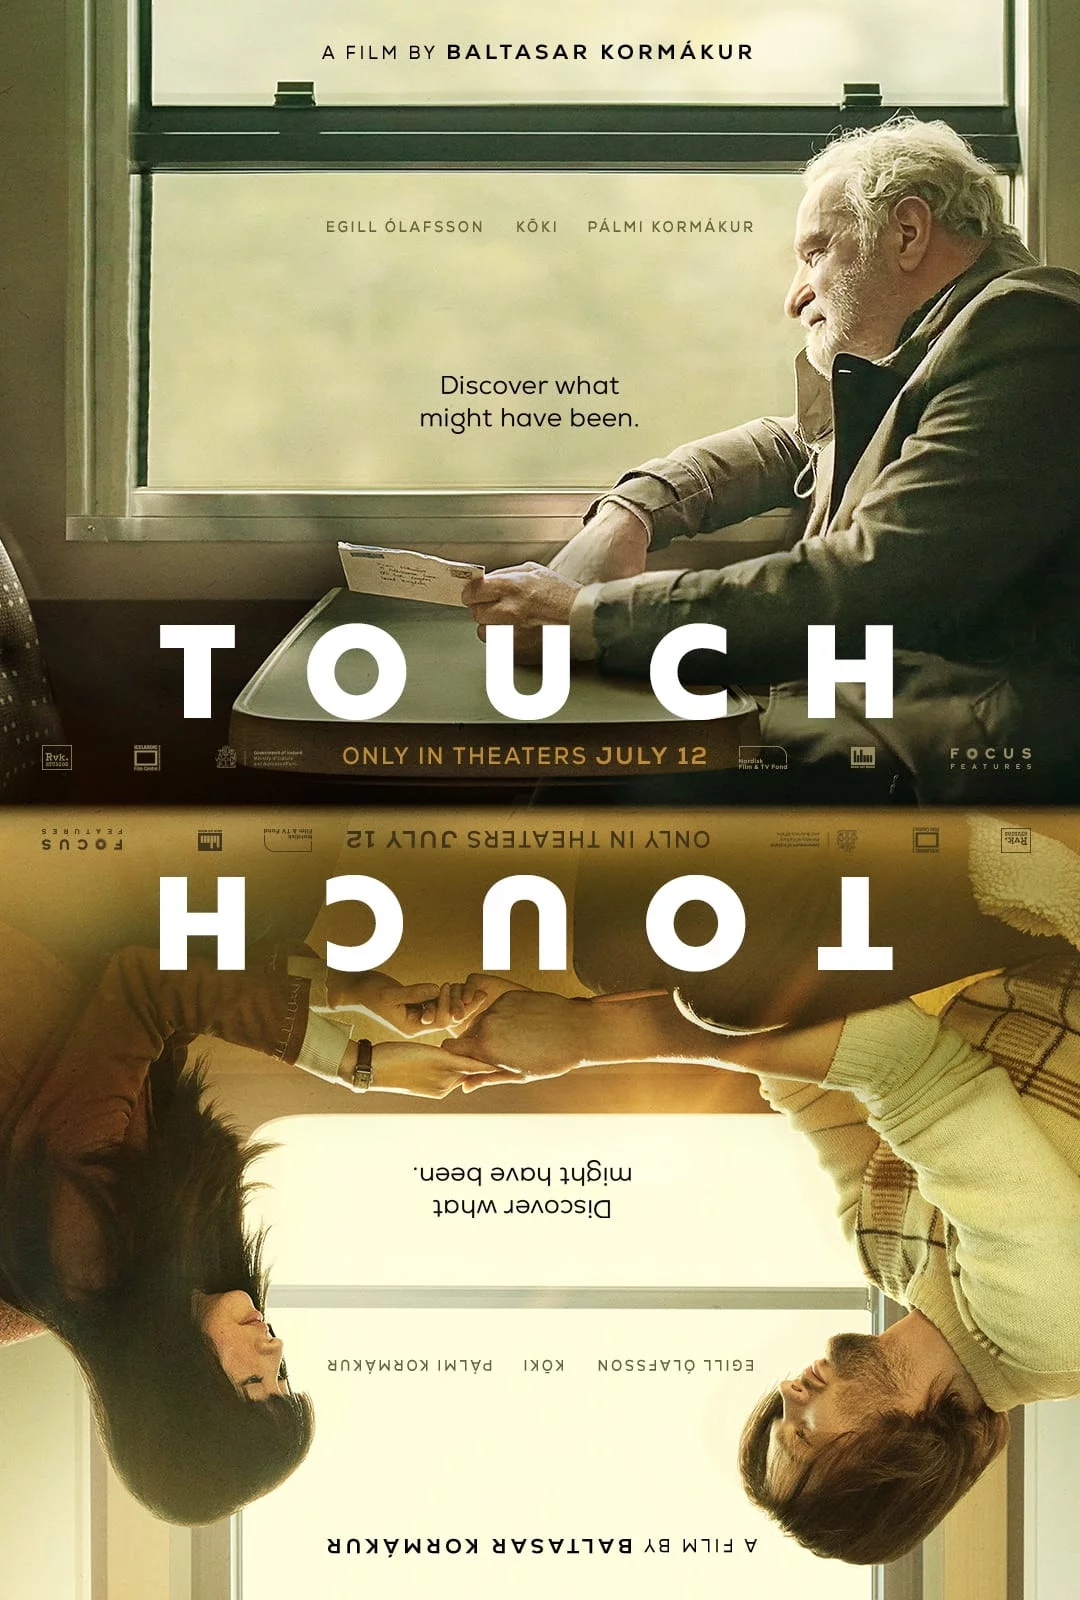 Photo du film : Touch